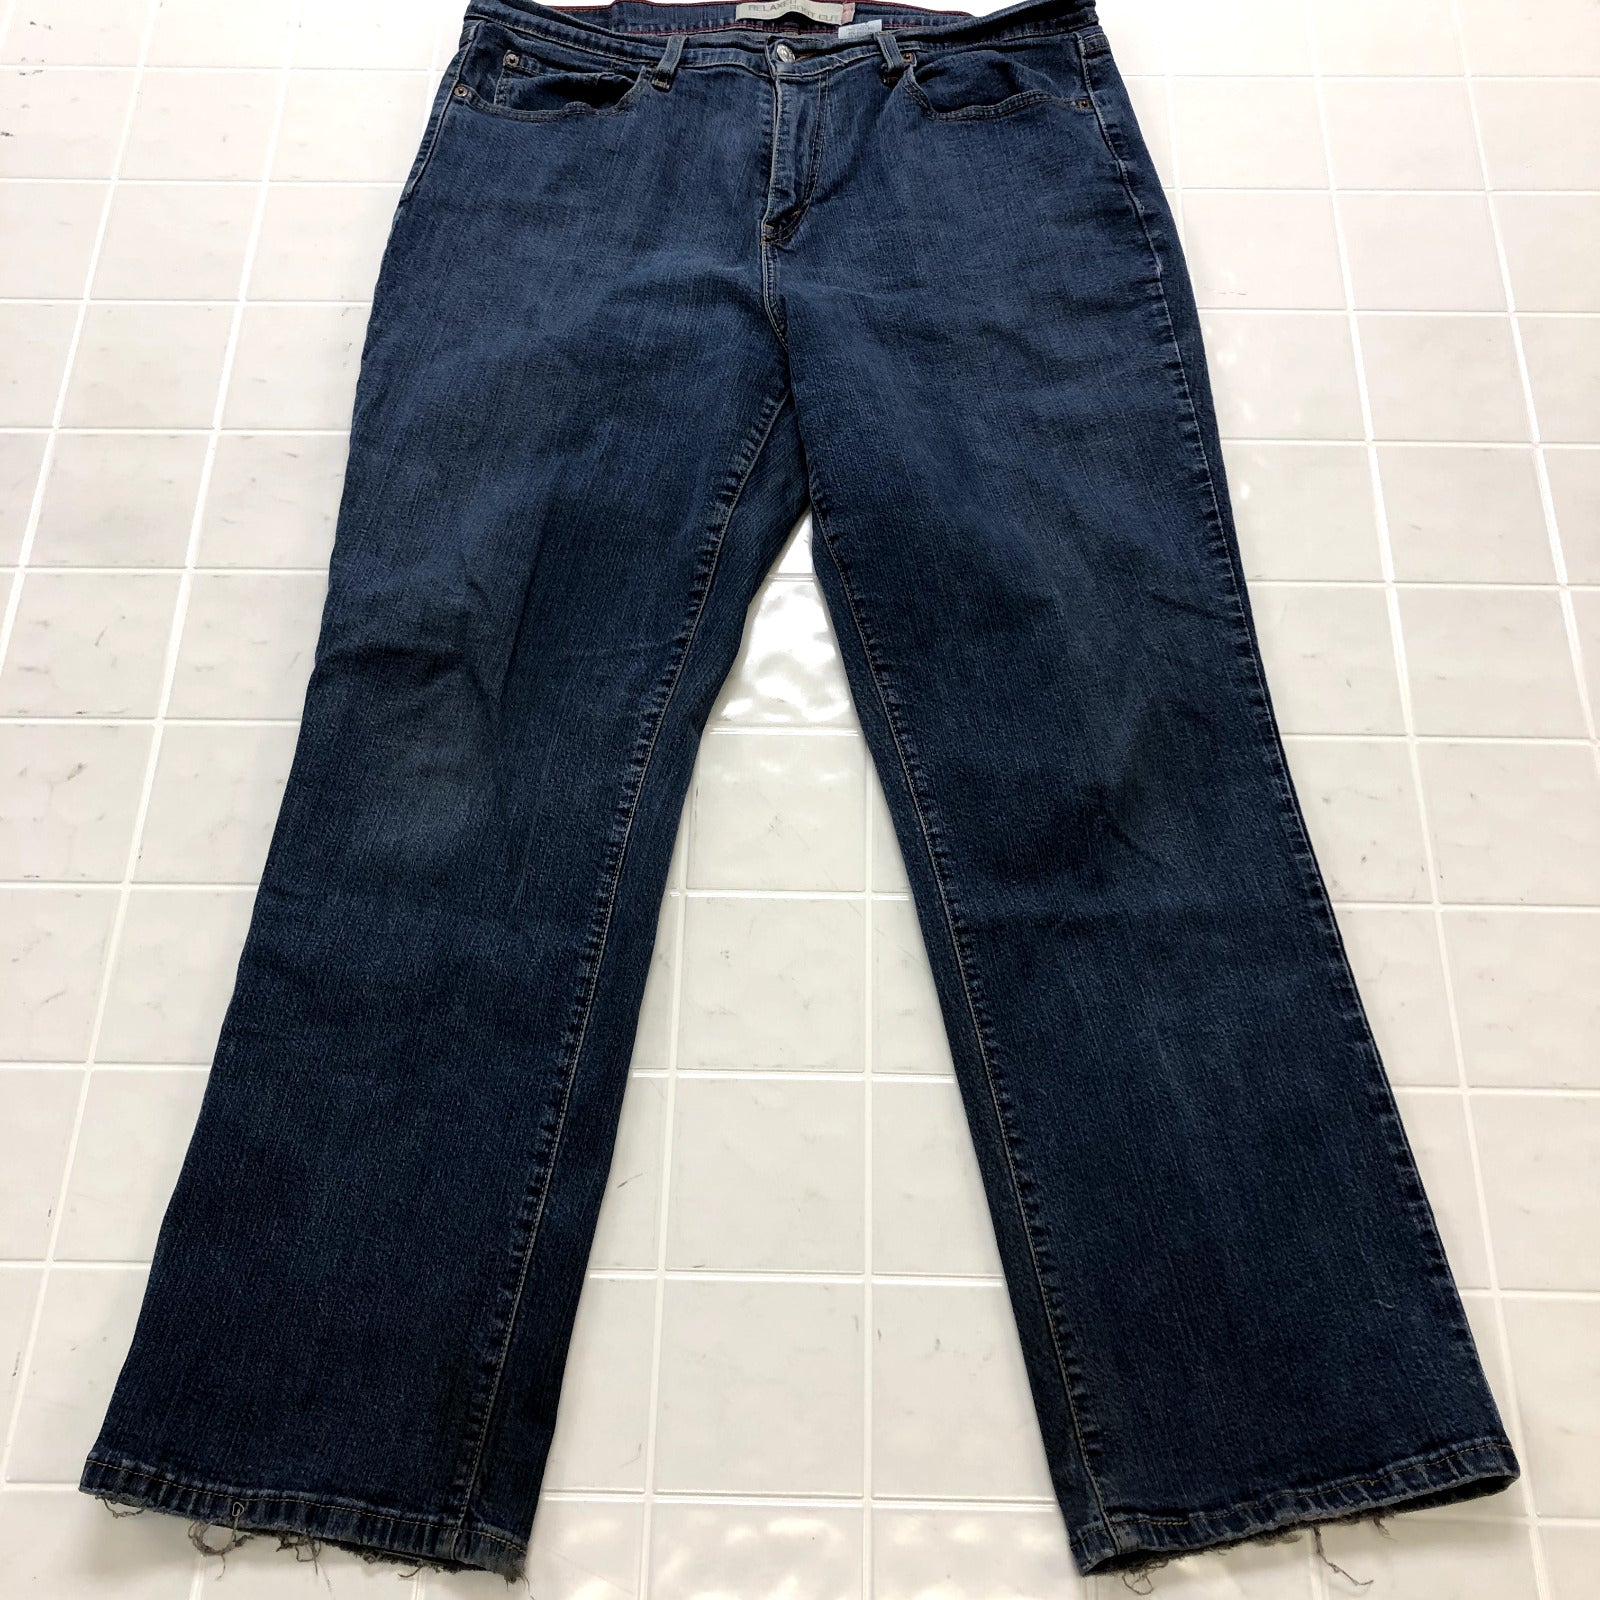 Levi's 550 Blue Denim Flat Front Chino Bootcut Regular Fit Jeans Women's Size 20